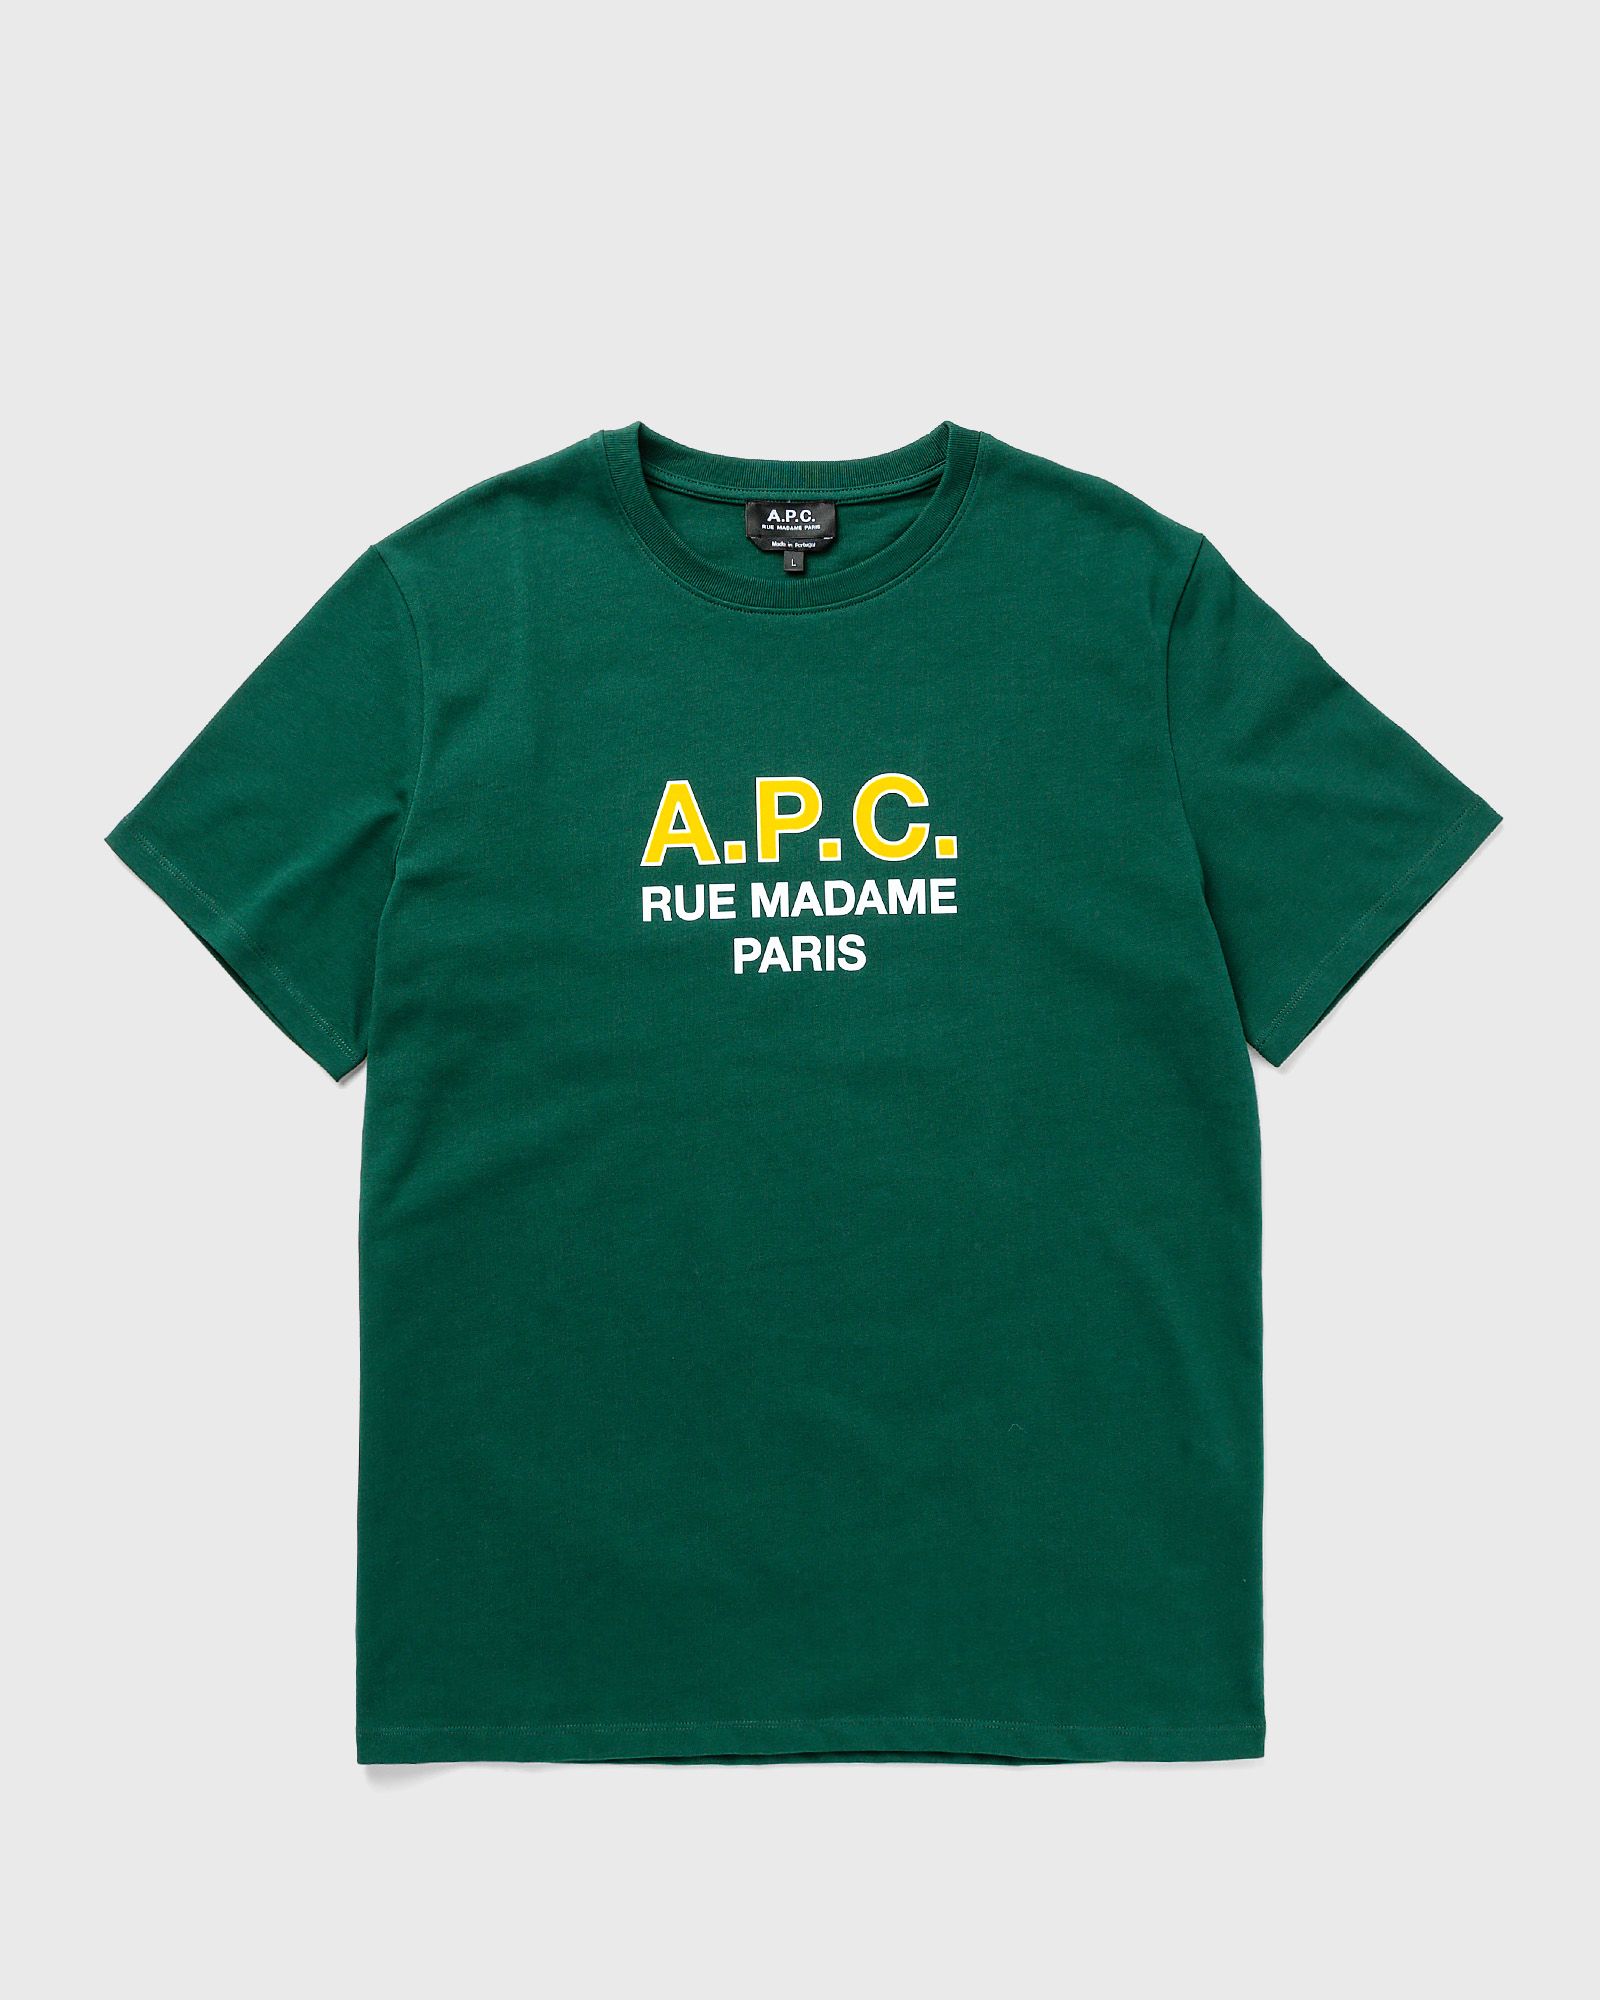 A.P.C. - t-shirt apc madame h men shortsleeves green in größe:l